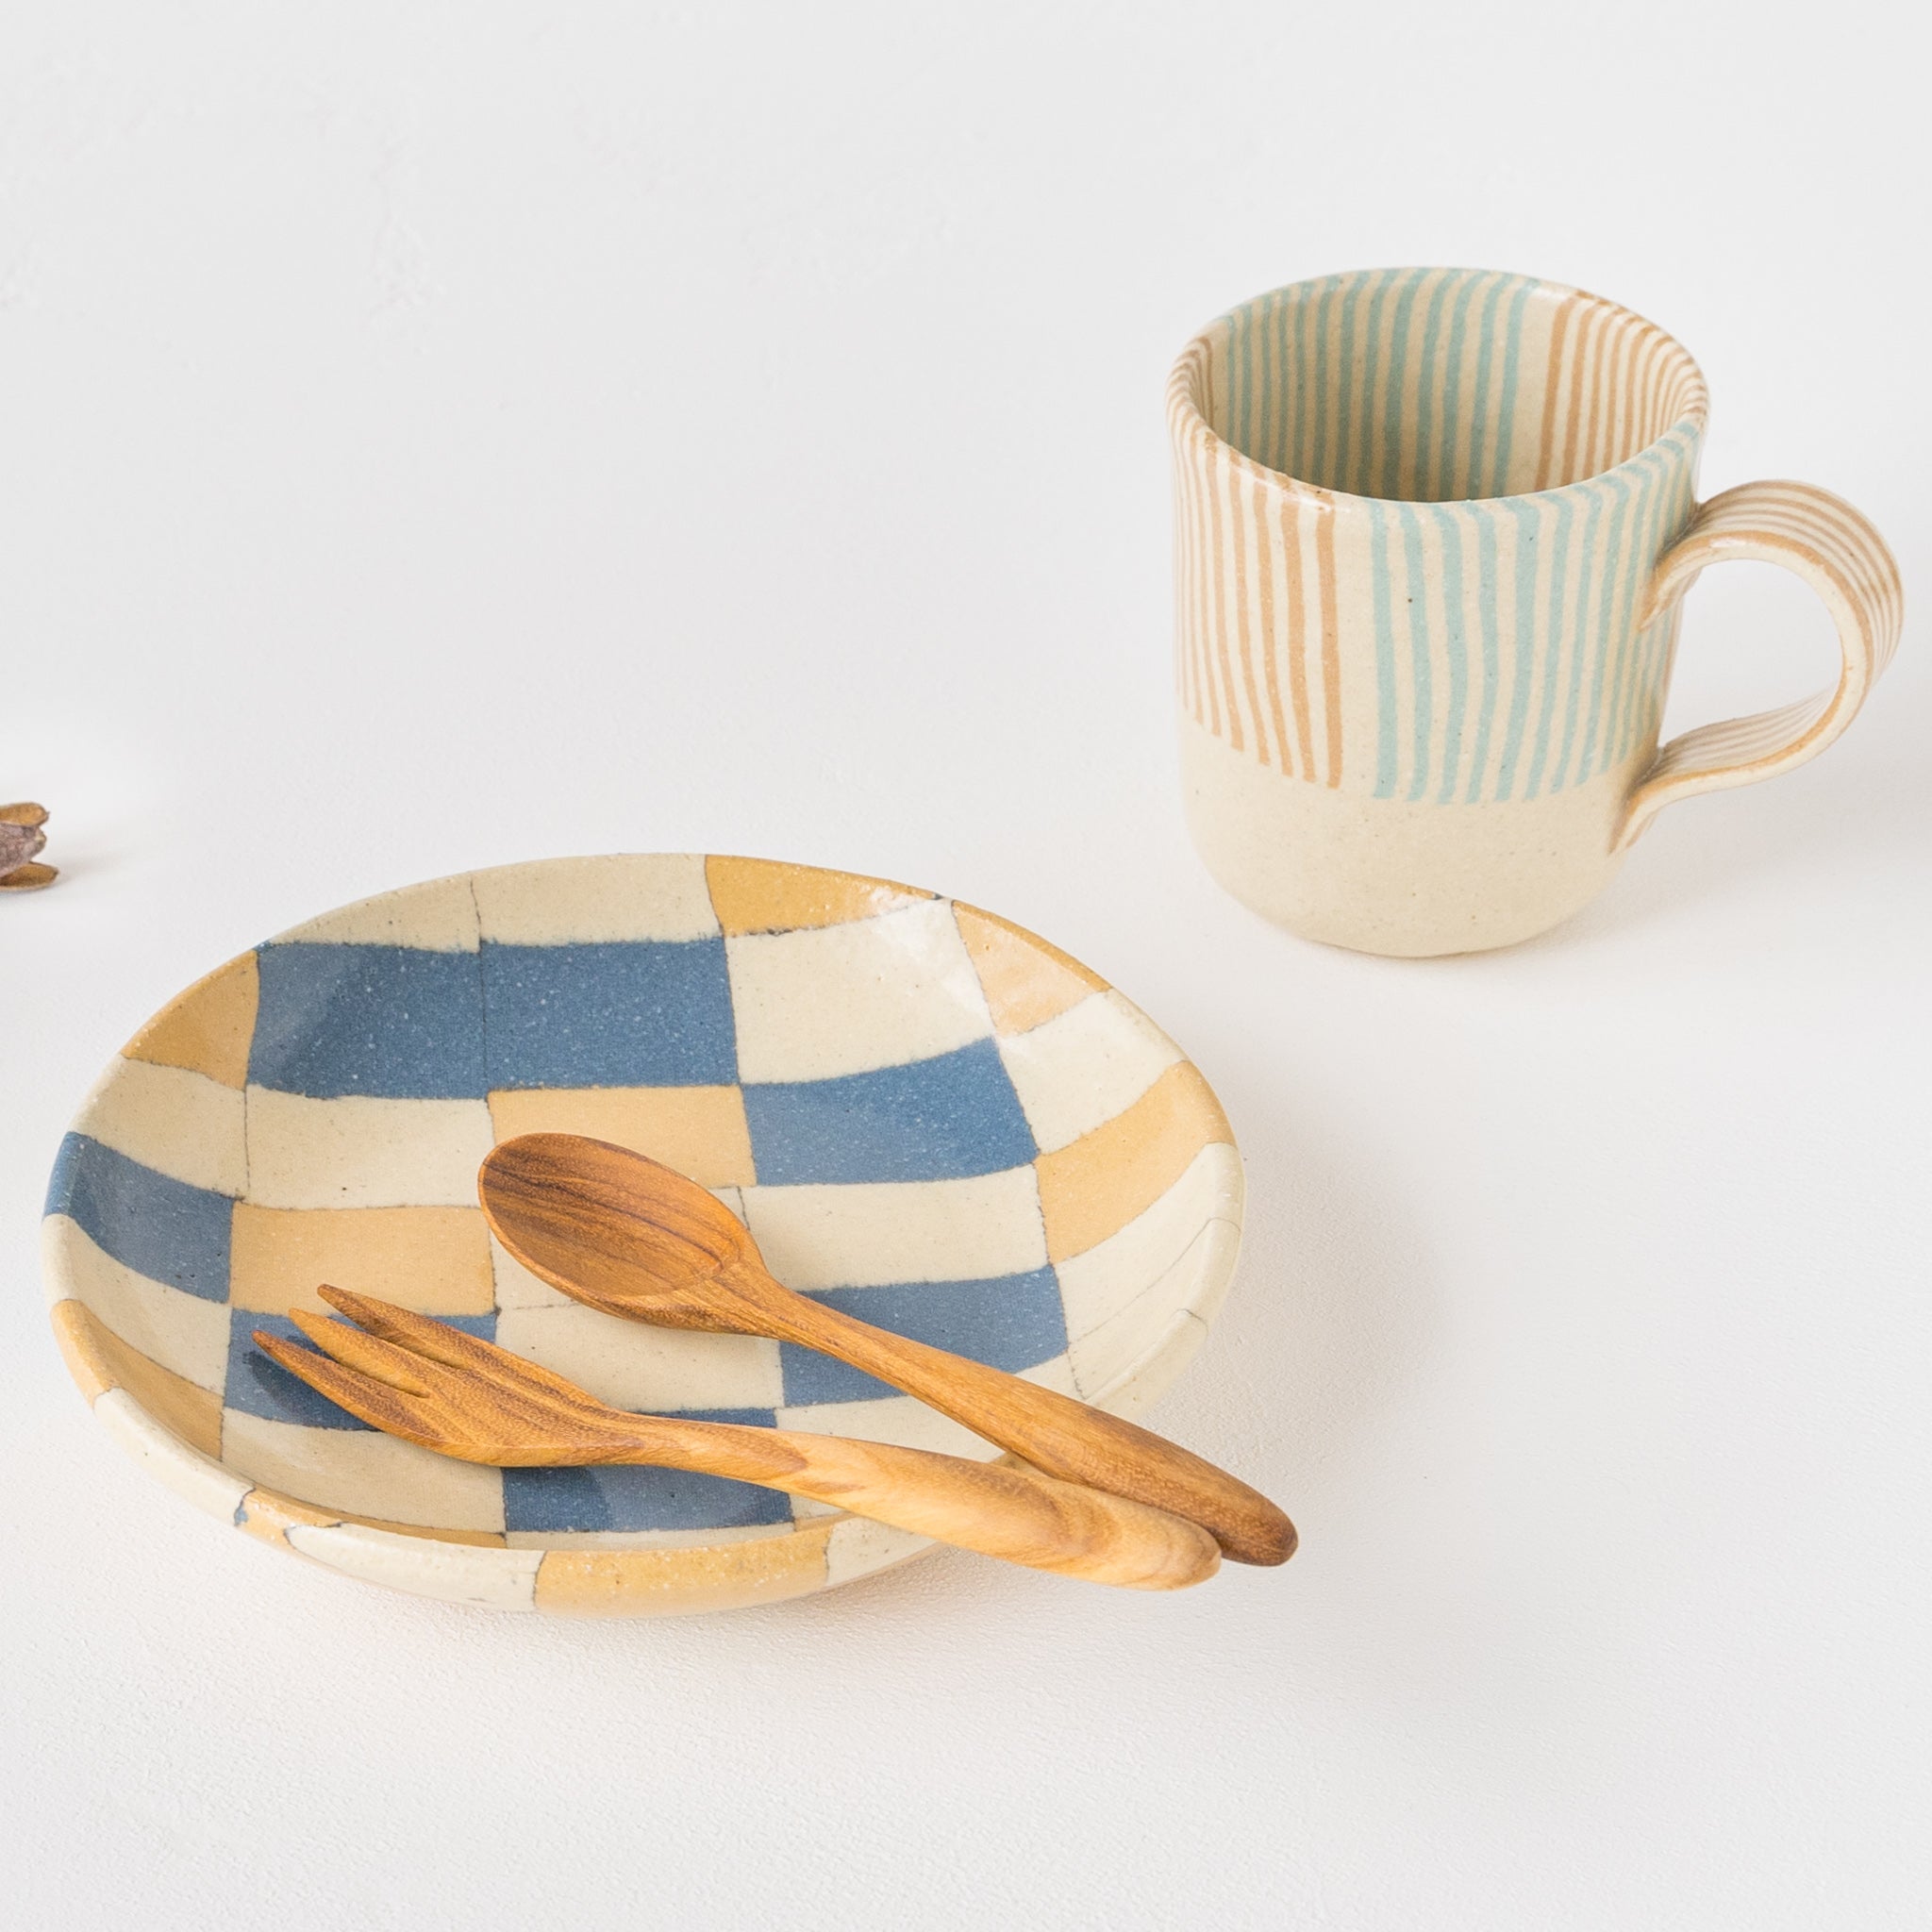 Hanako Sakashita's kneaded tableware that beautifully colors the dining table